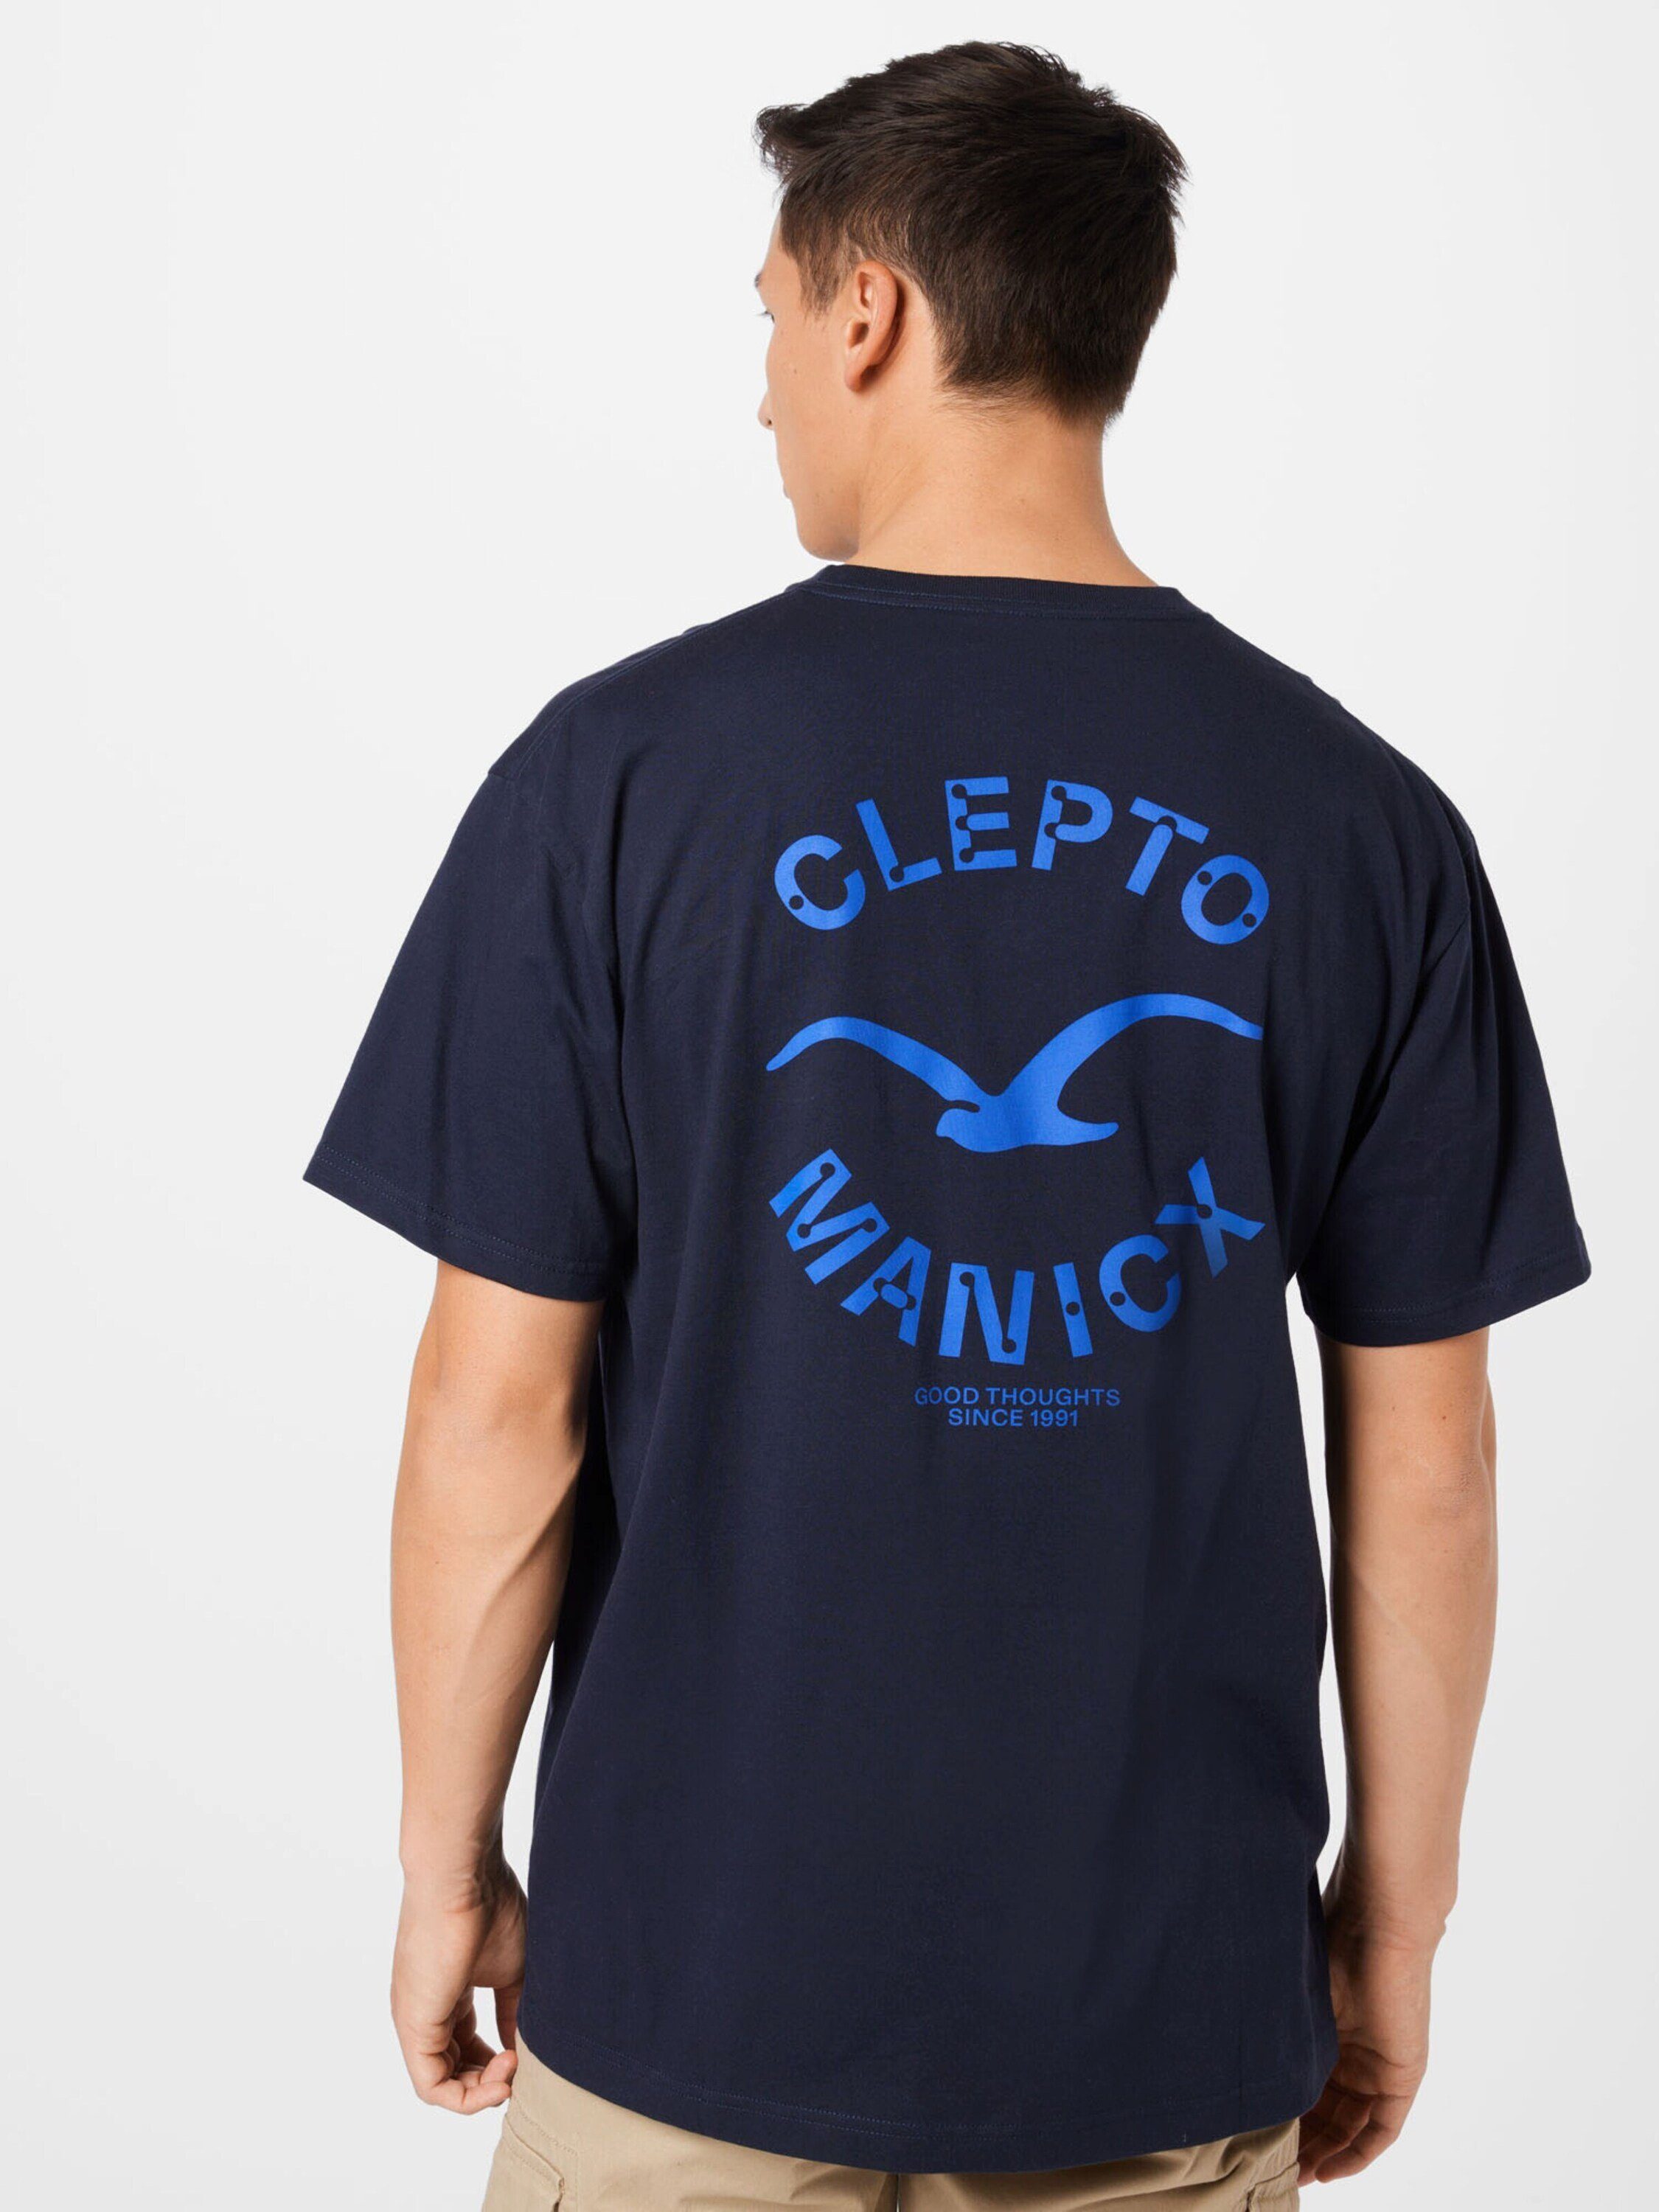 T-Shirt großem Source mit Cleptomanicx Backprint, Ton-in-Ton-Nähte